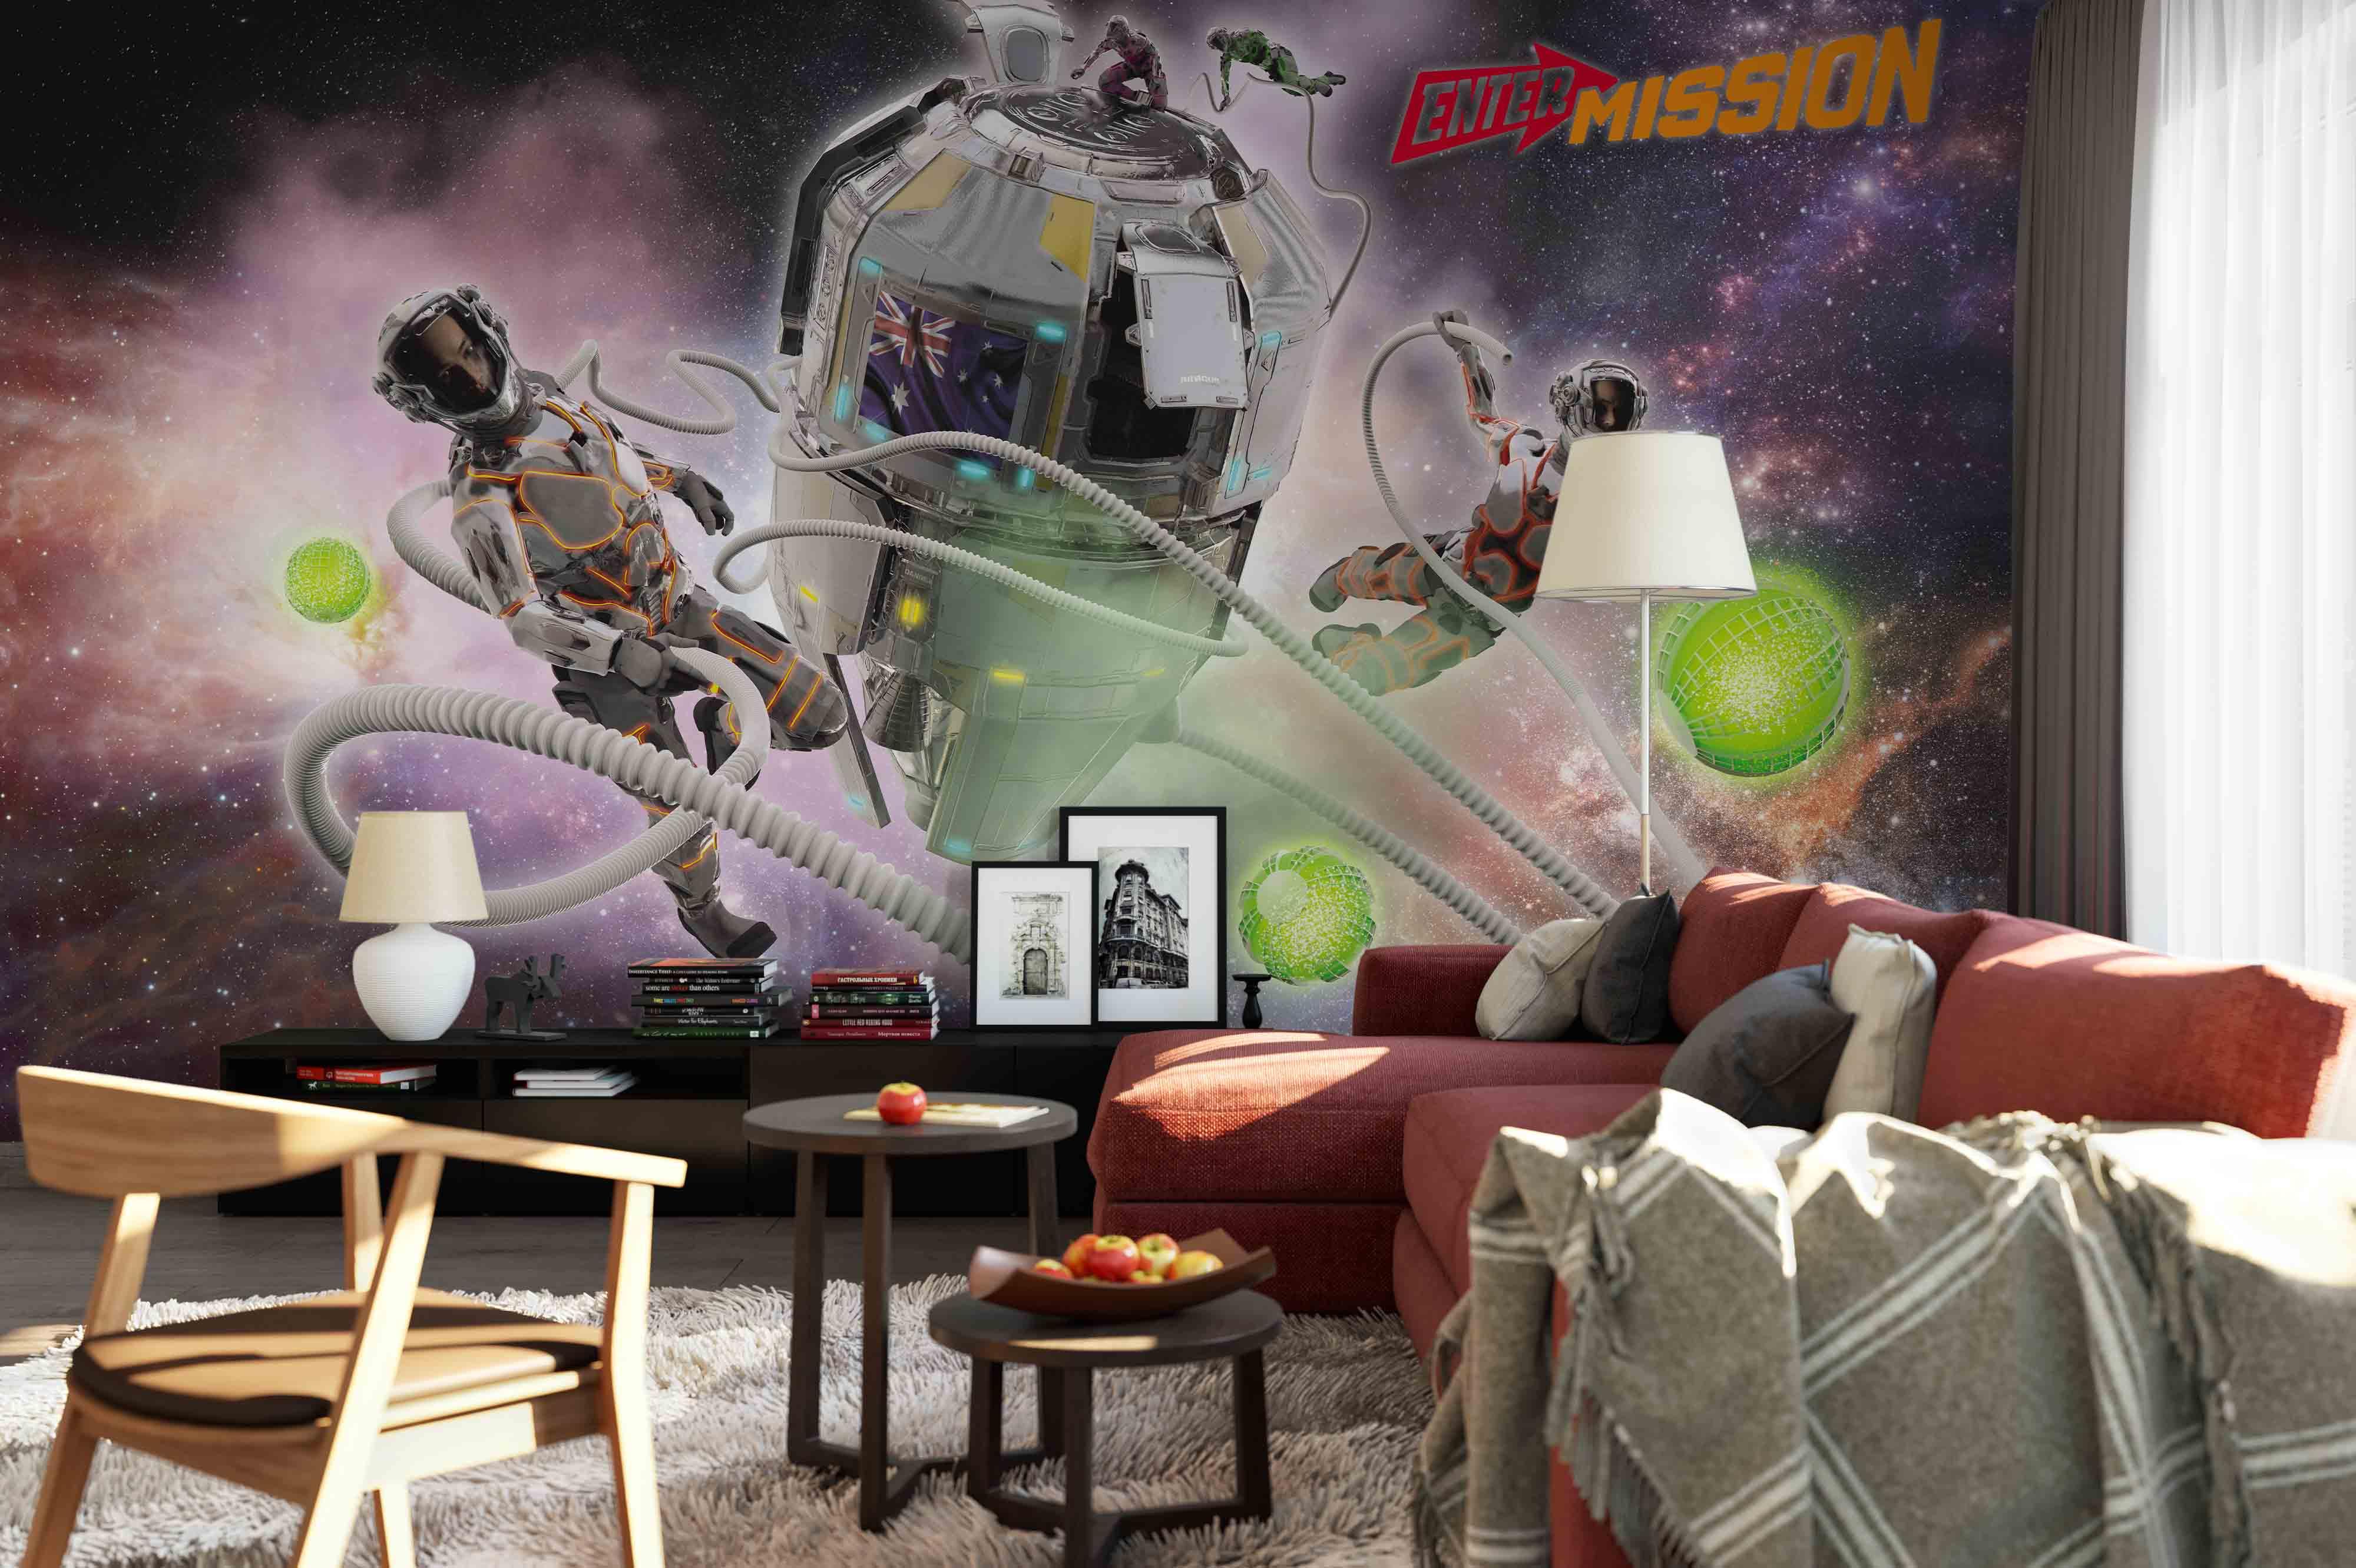 3D Astronaut Space Capsule Universe Wall Mural Wallpaper 10- Jess Art Decoration